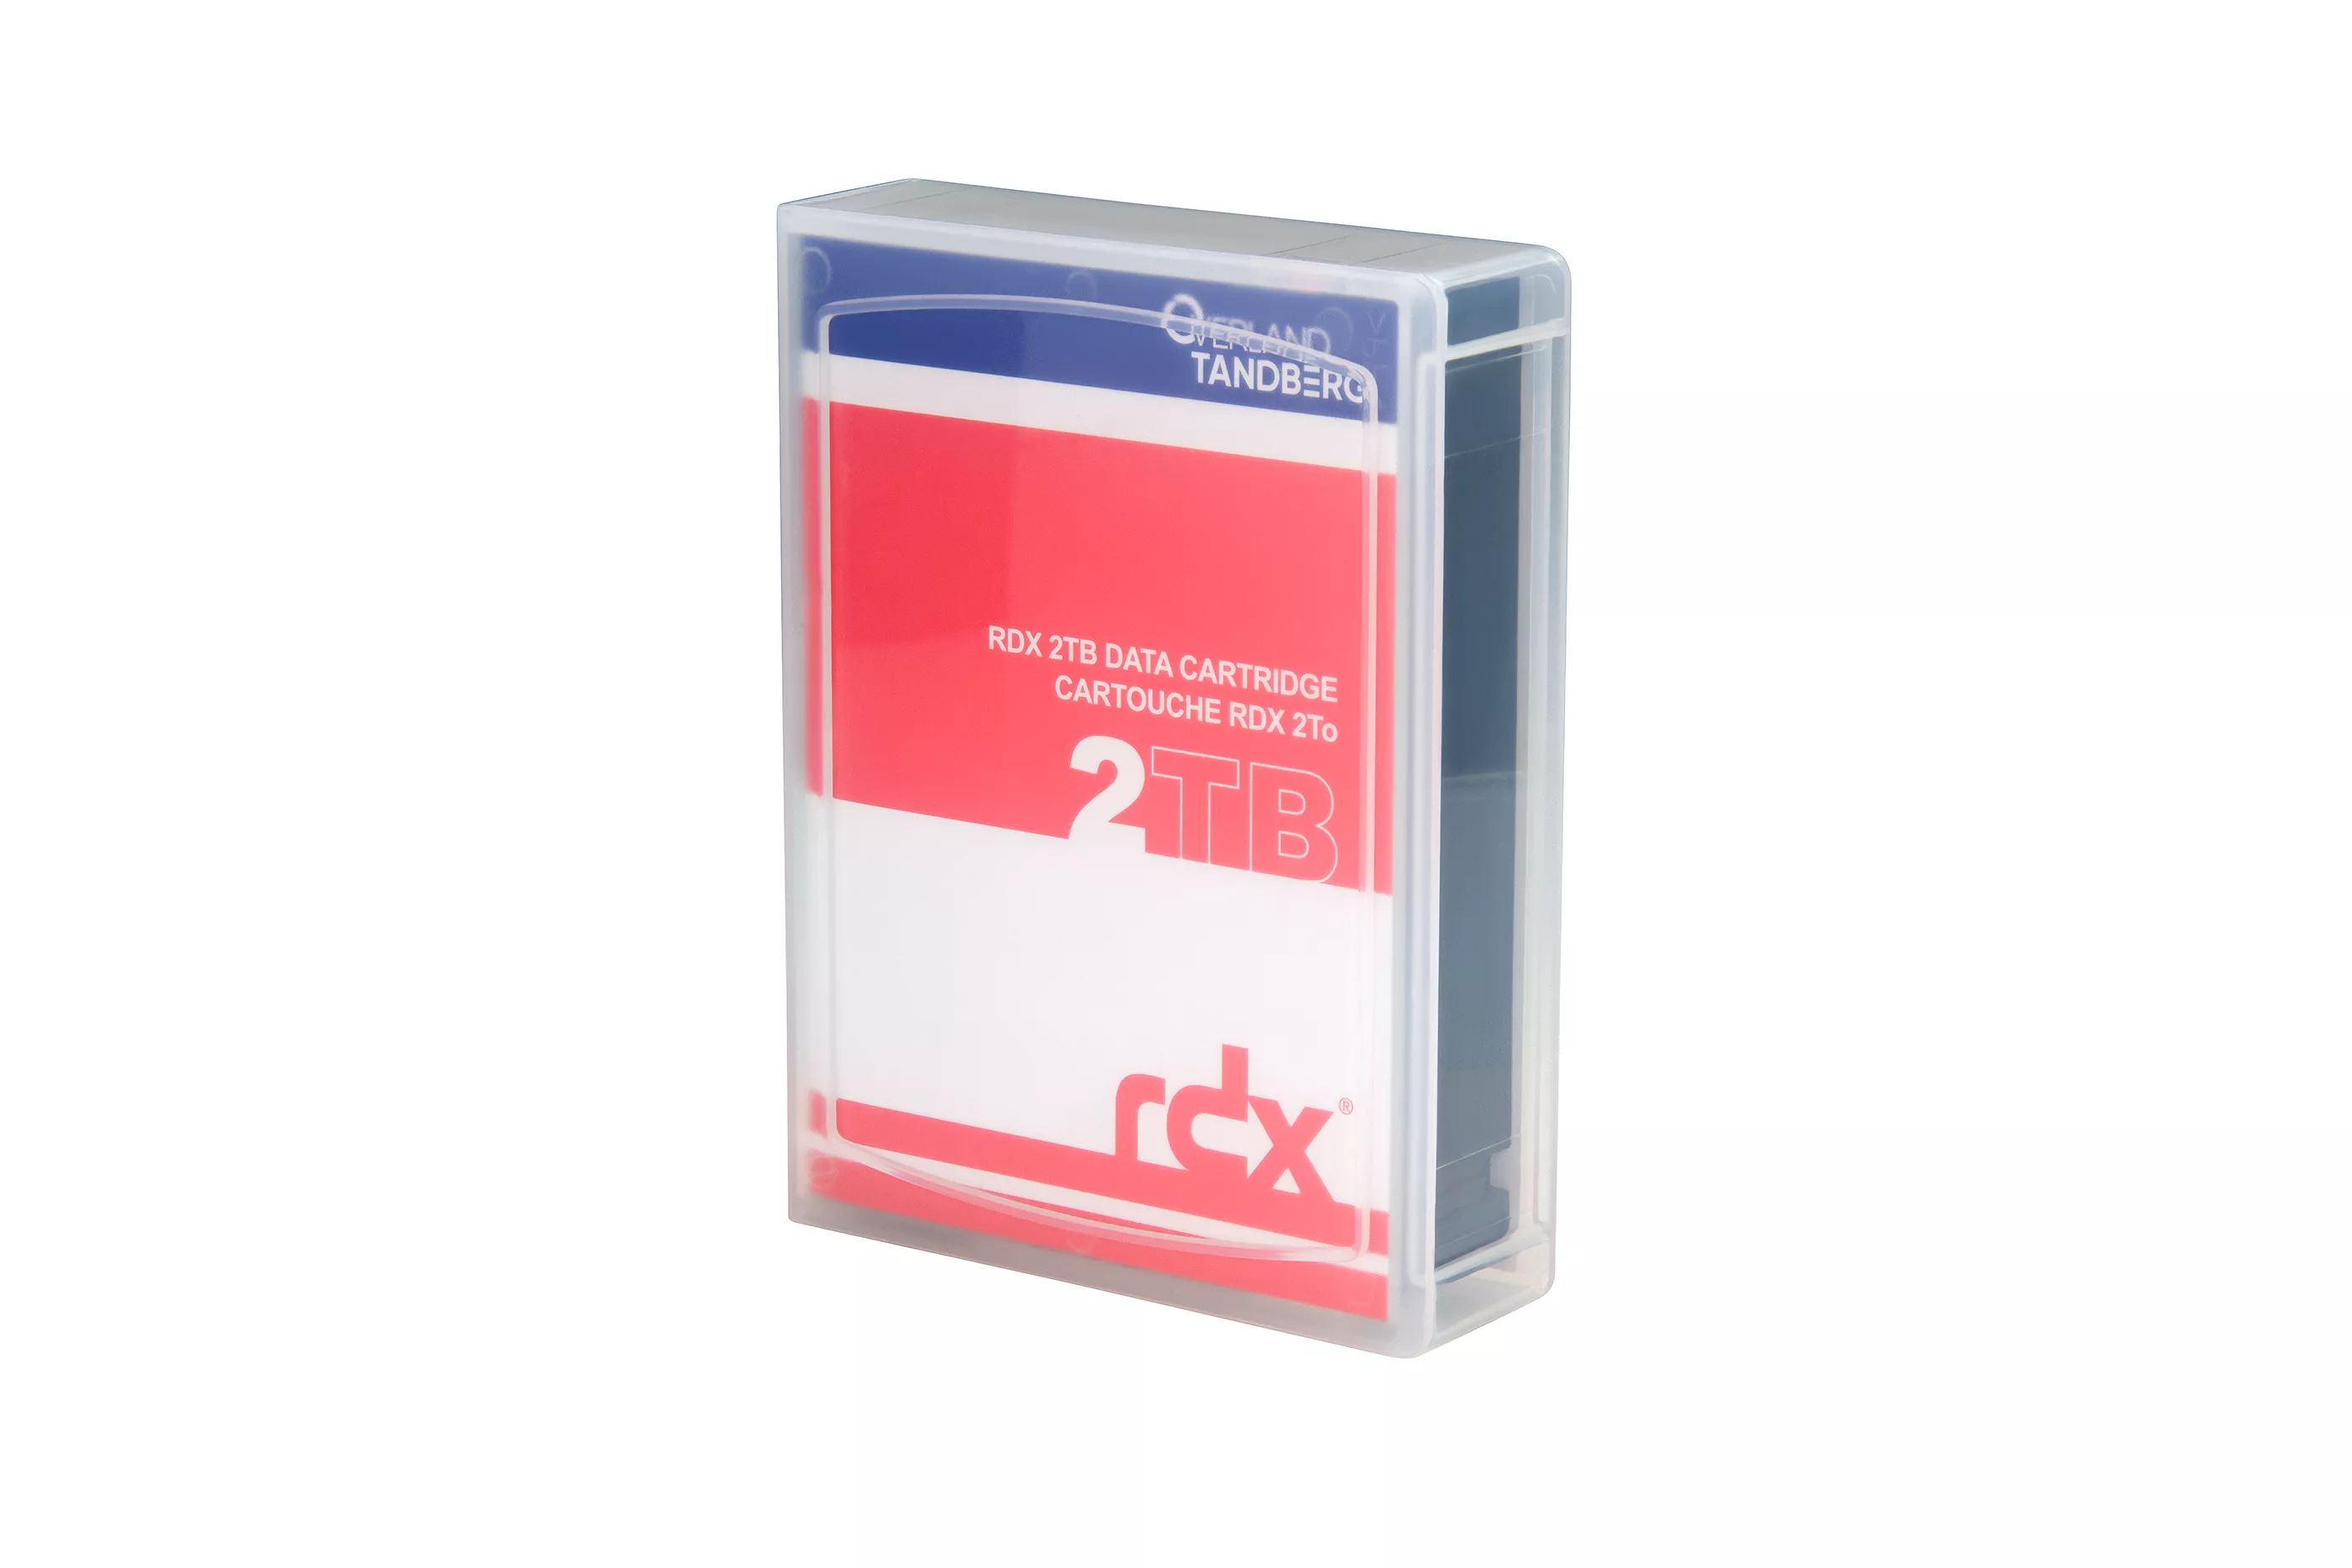 Vente Overland-Tandberg Cassette RDX 2 To Overland-Tandberg au meilleur prix - visuel 2